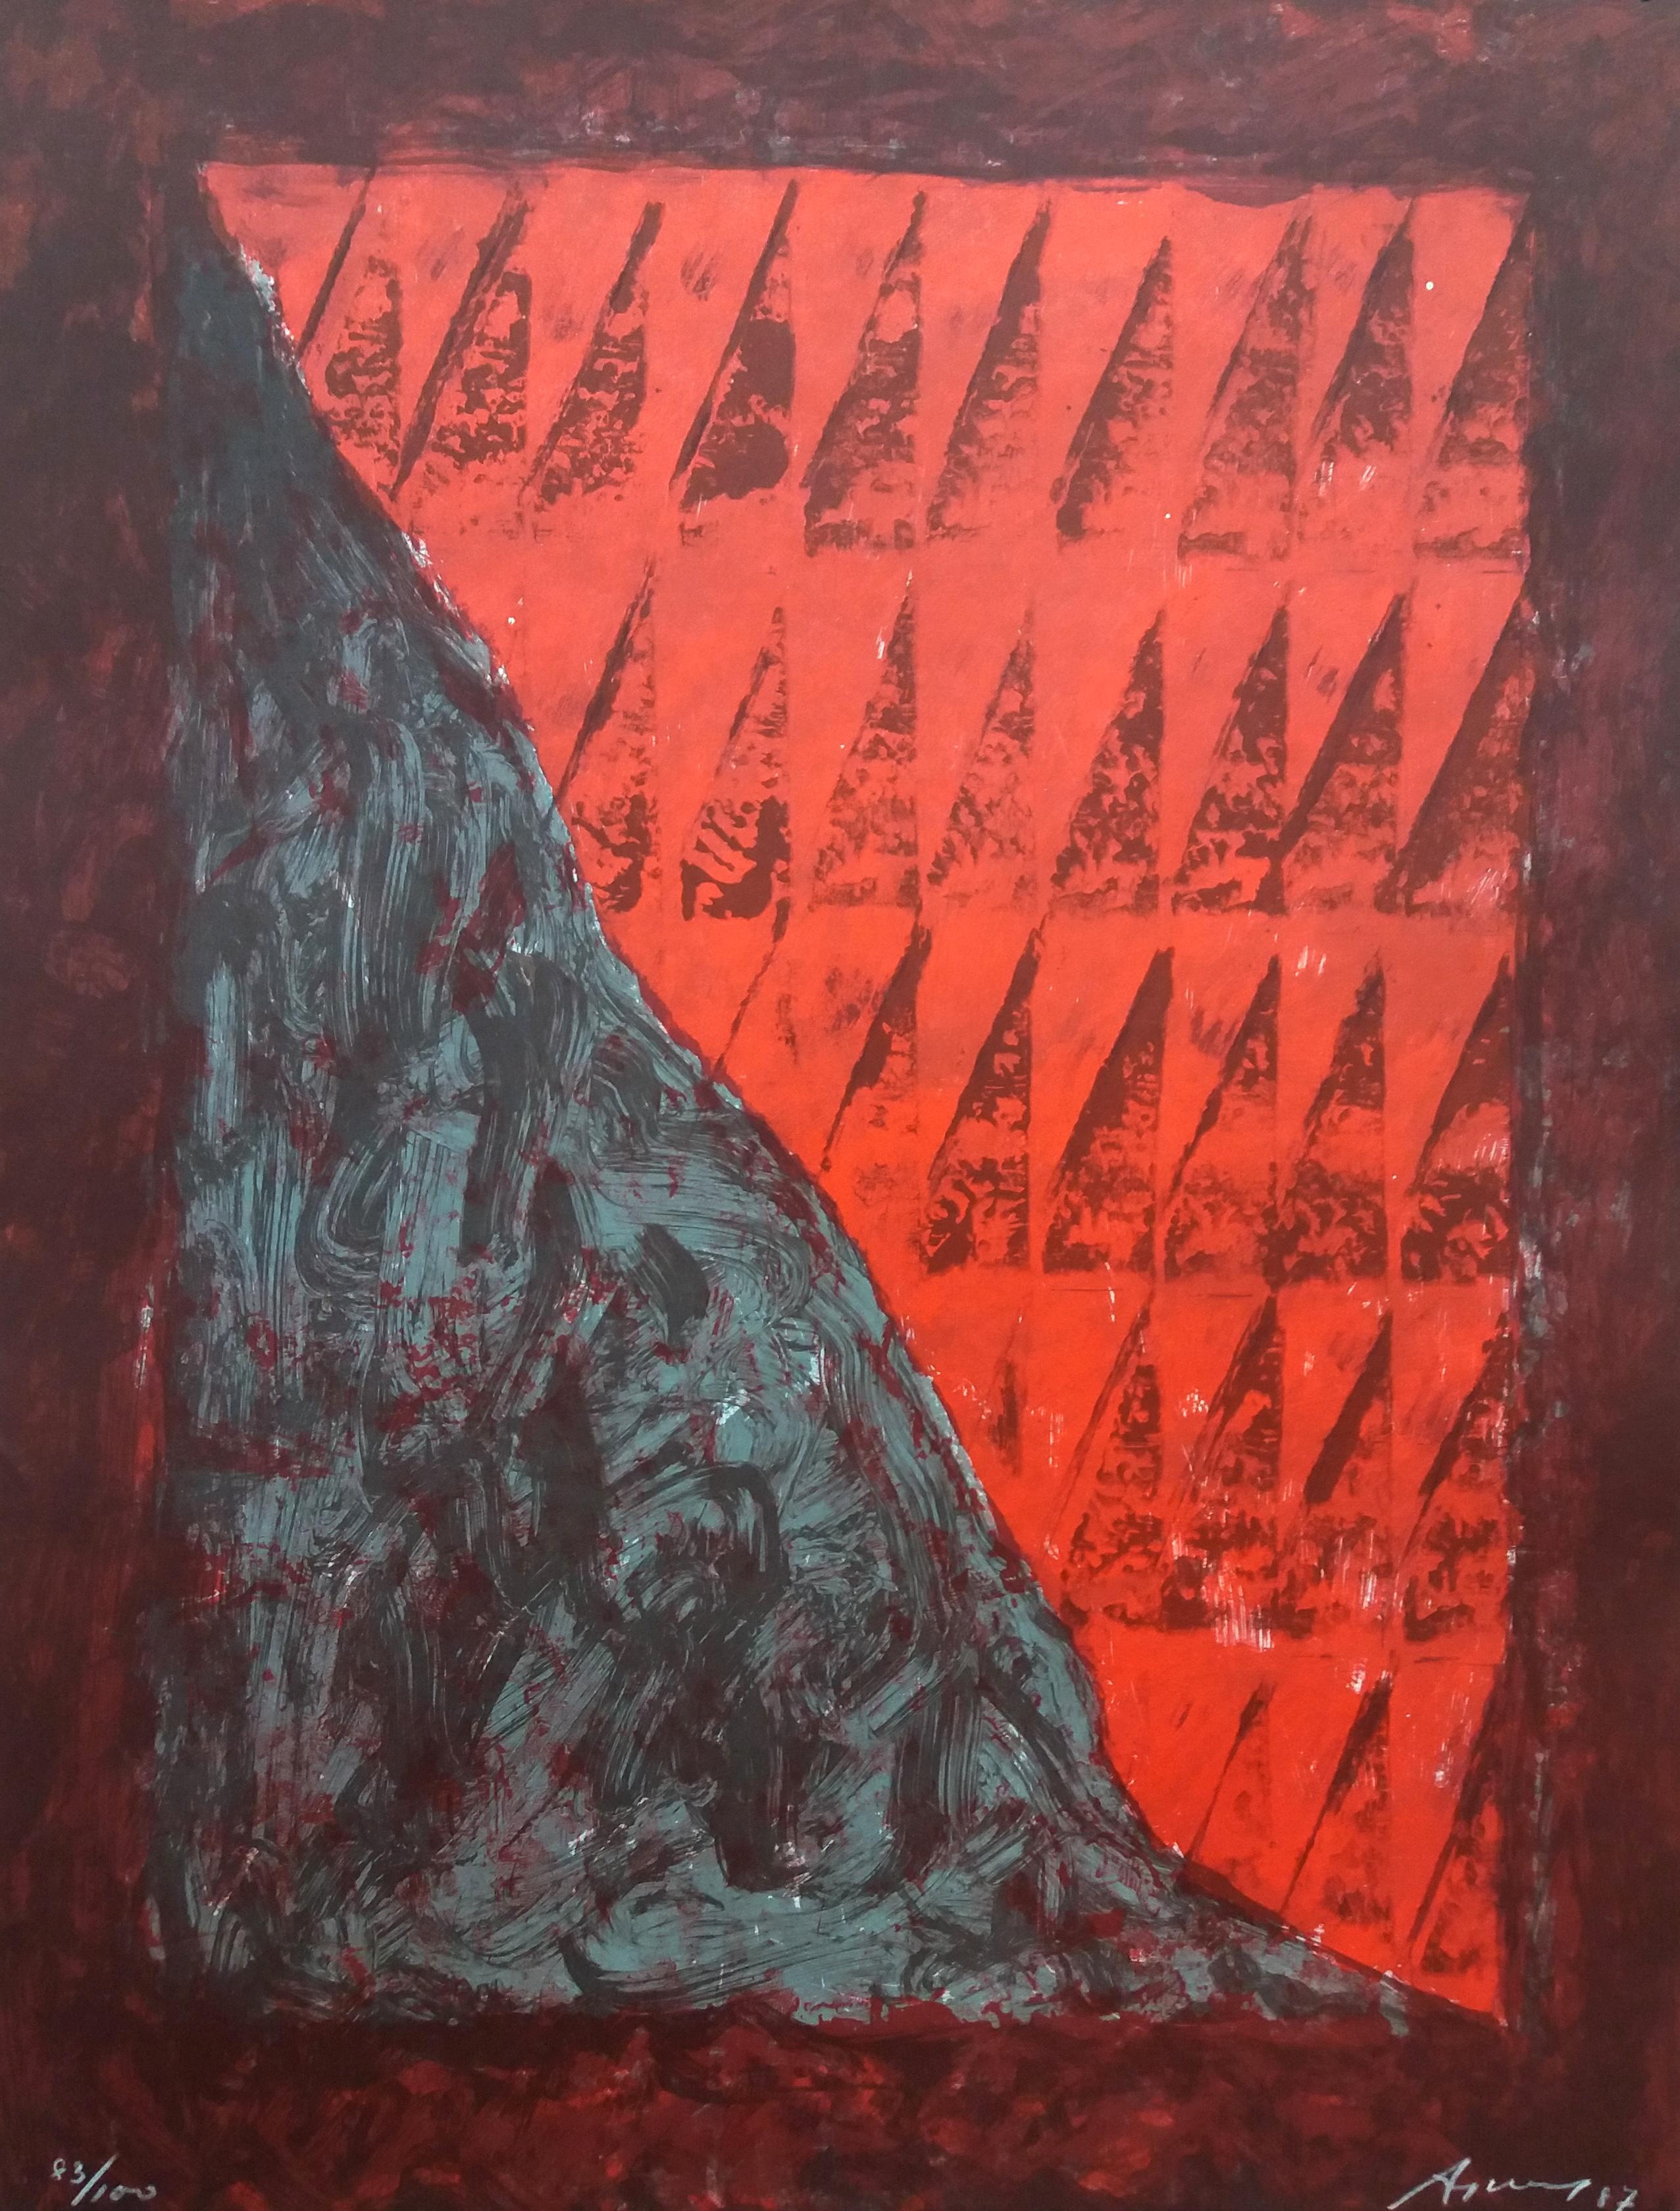 Argimon  Red and Brown, Vertical,  original litograph painting - Print by Daniel Argimon